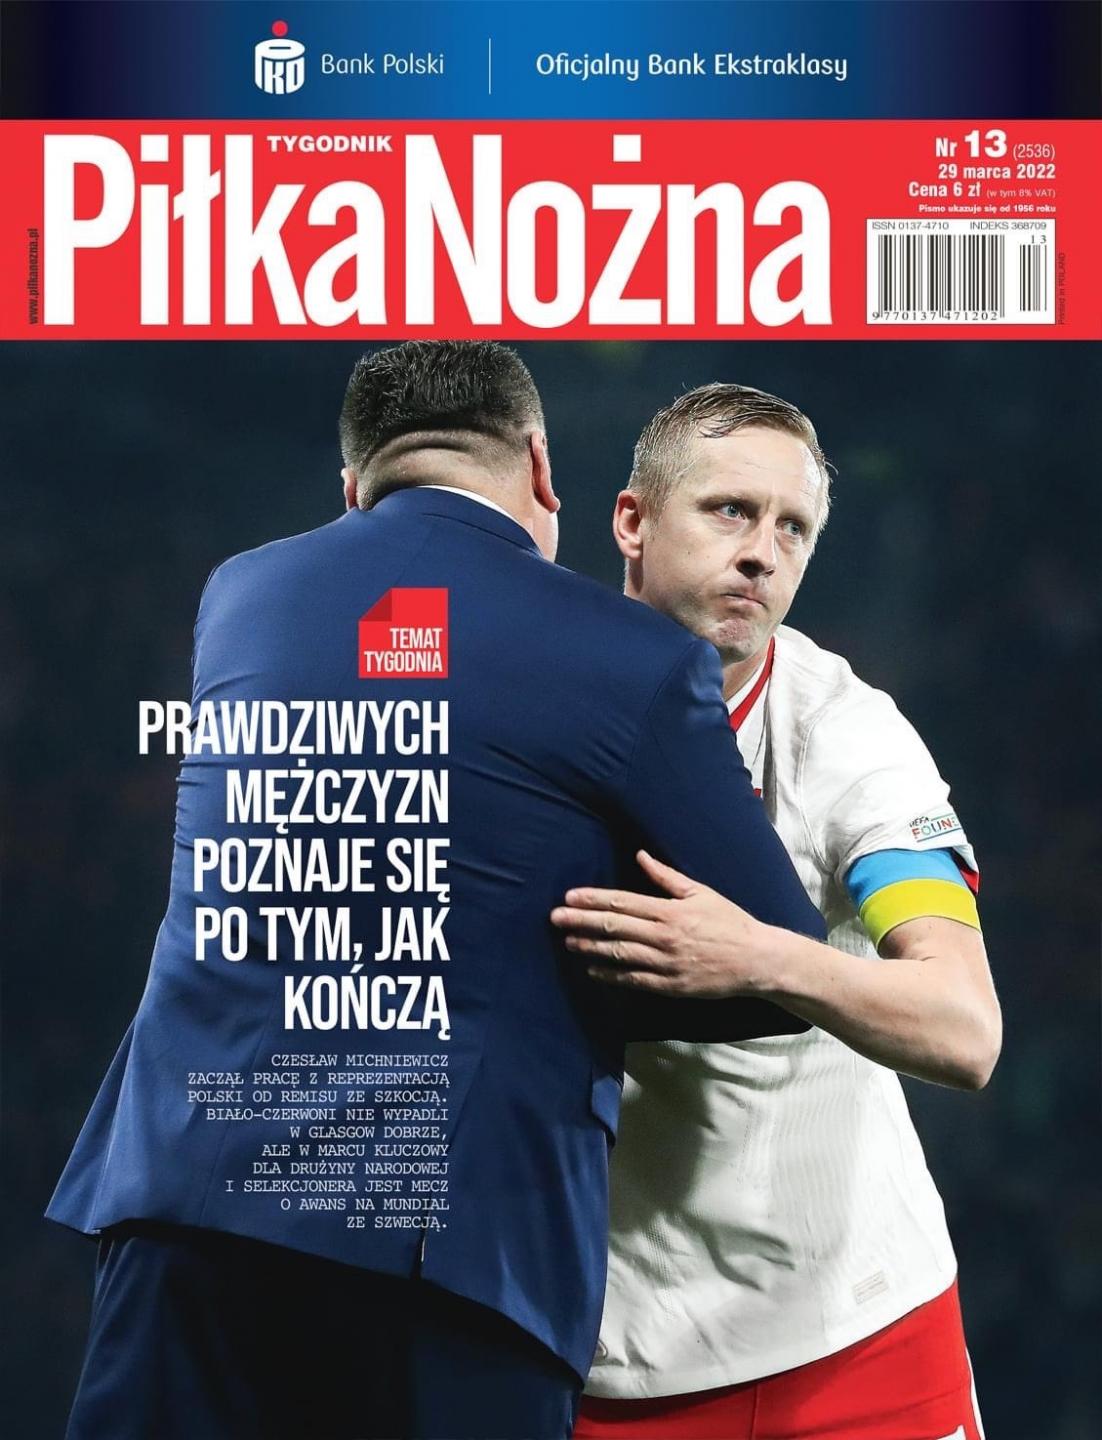 Okładka Piłka Nożna po meczu Szkocja - Polska 1:1 (24.03.2022).